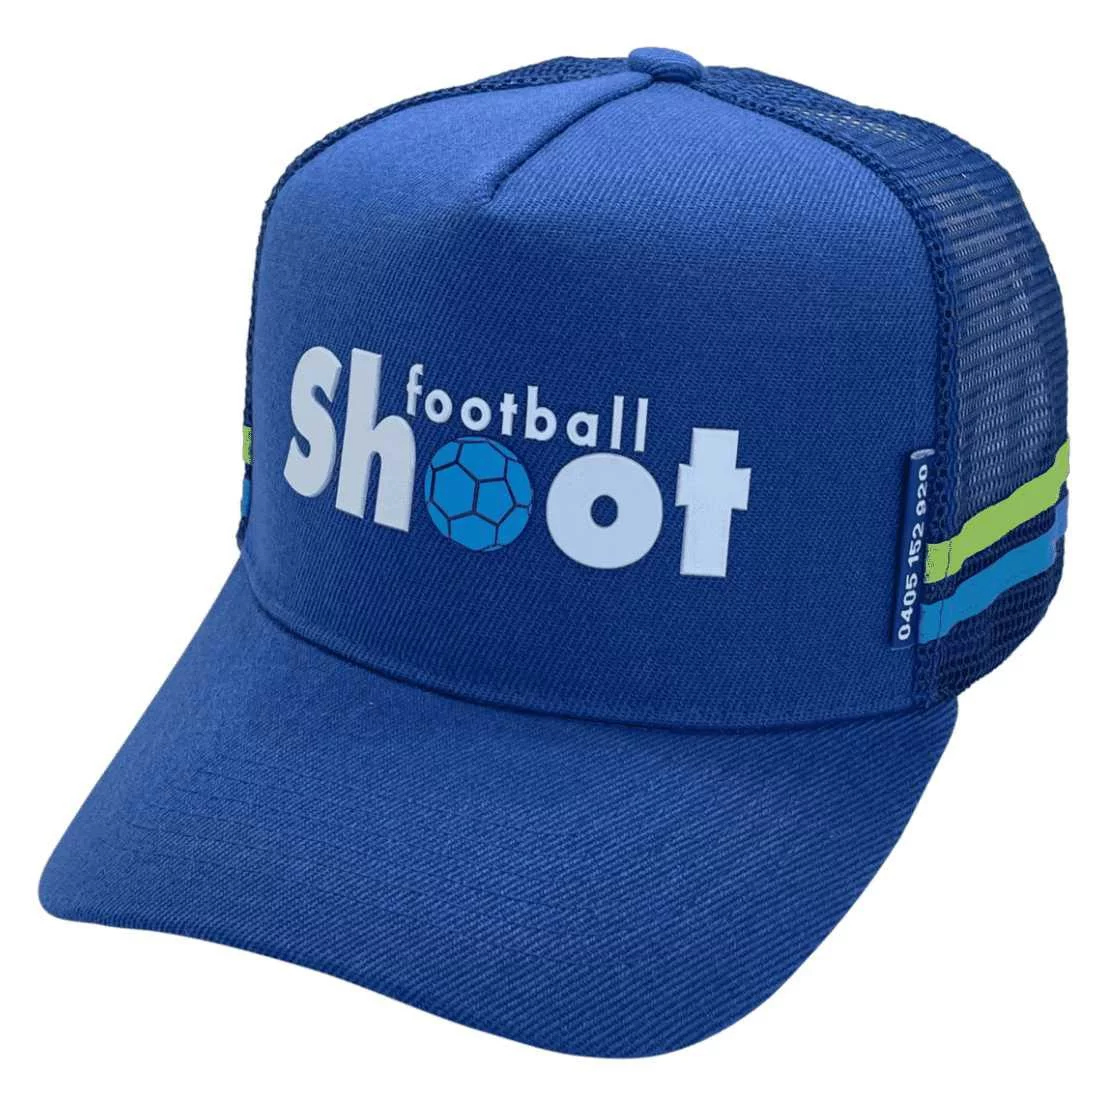 Shoot Football Port Macquarie NSW HP Original Basic Aussie Trucker Hat with Australian Head Fit Crown Size Royal Blue